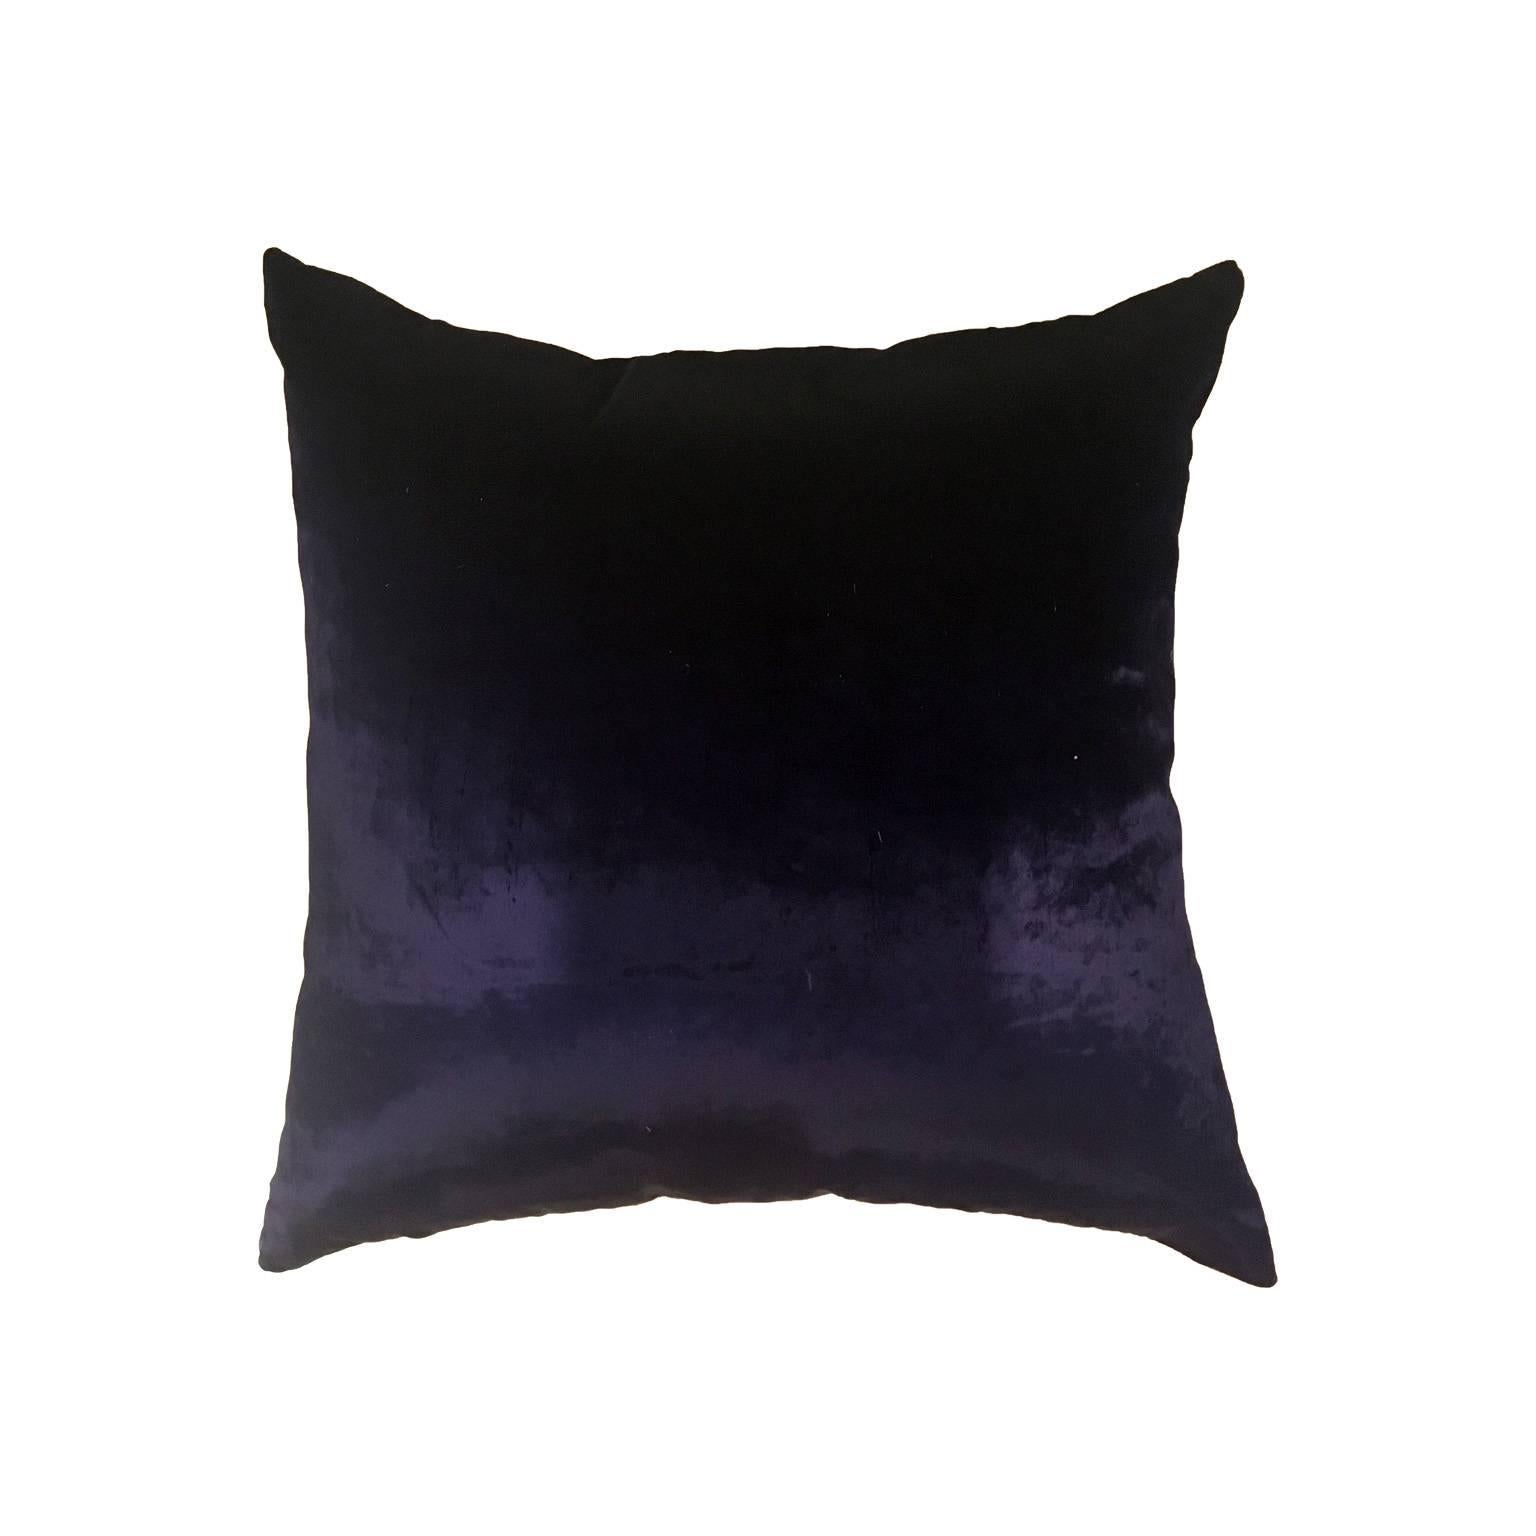 Hermès 'Le Tarot’ silk scarf pillow with blue velvet backing.